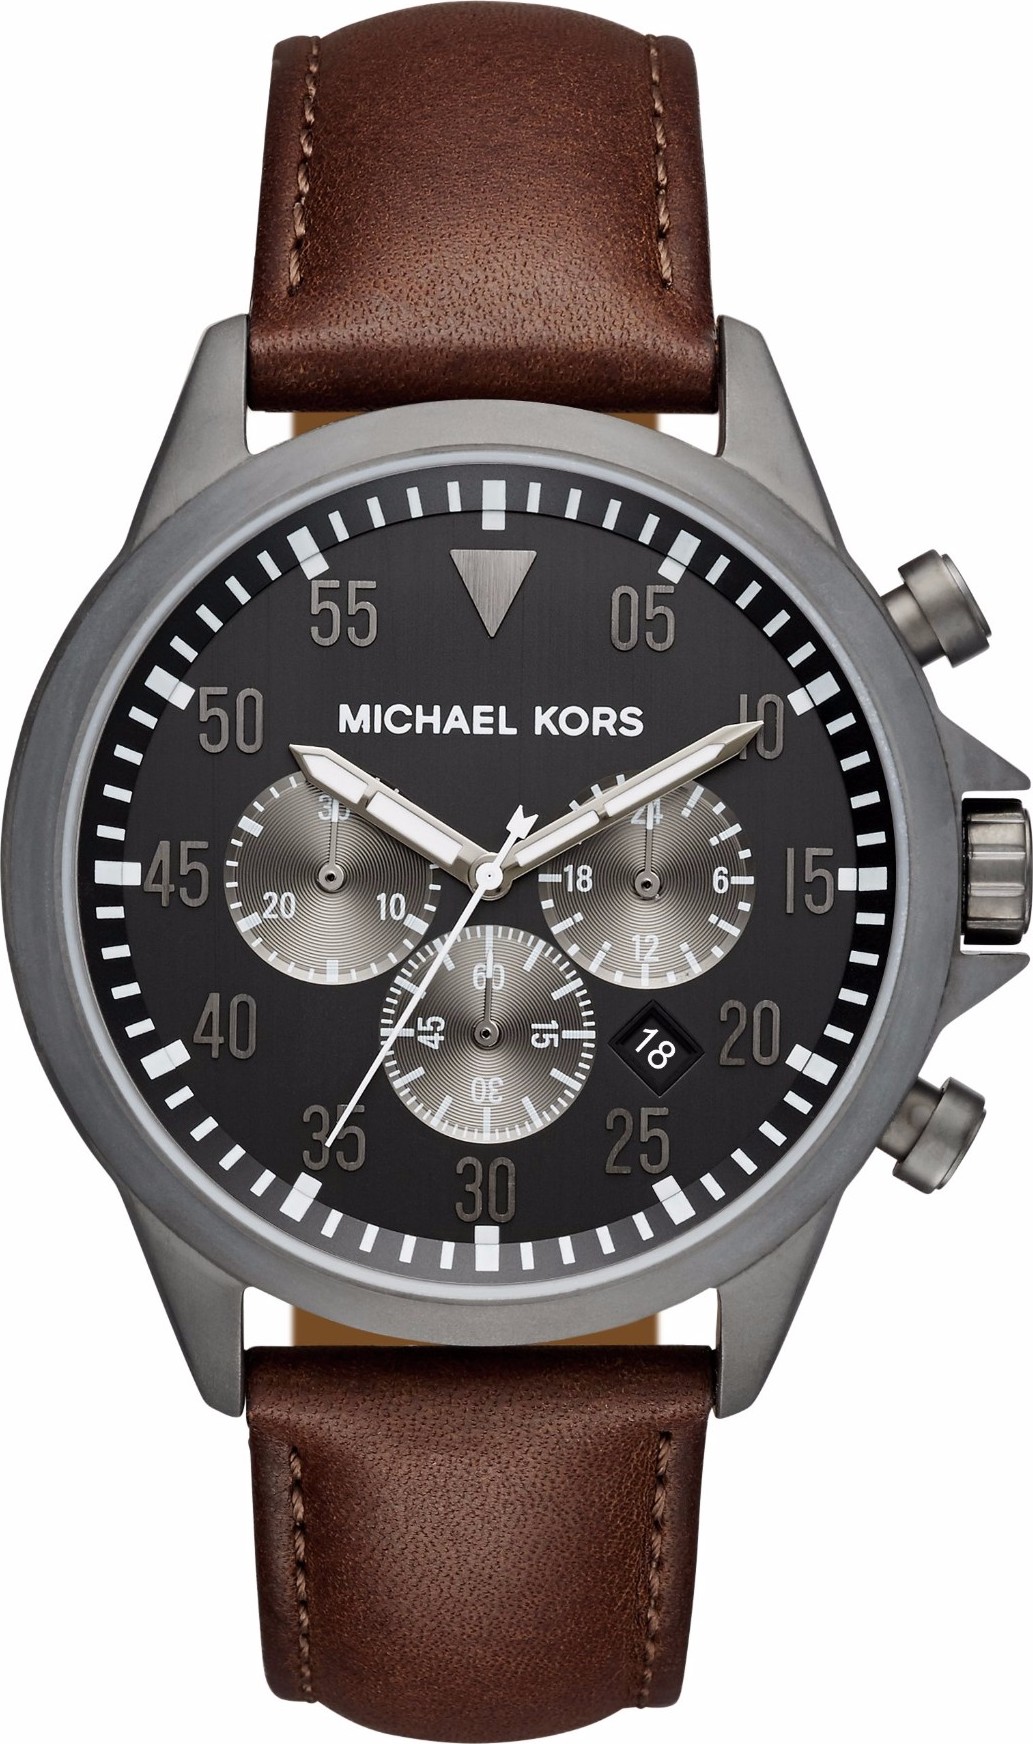 Đồng hồ Michael Kors Gage Chronograph Beige MK8441  12giovn